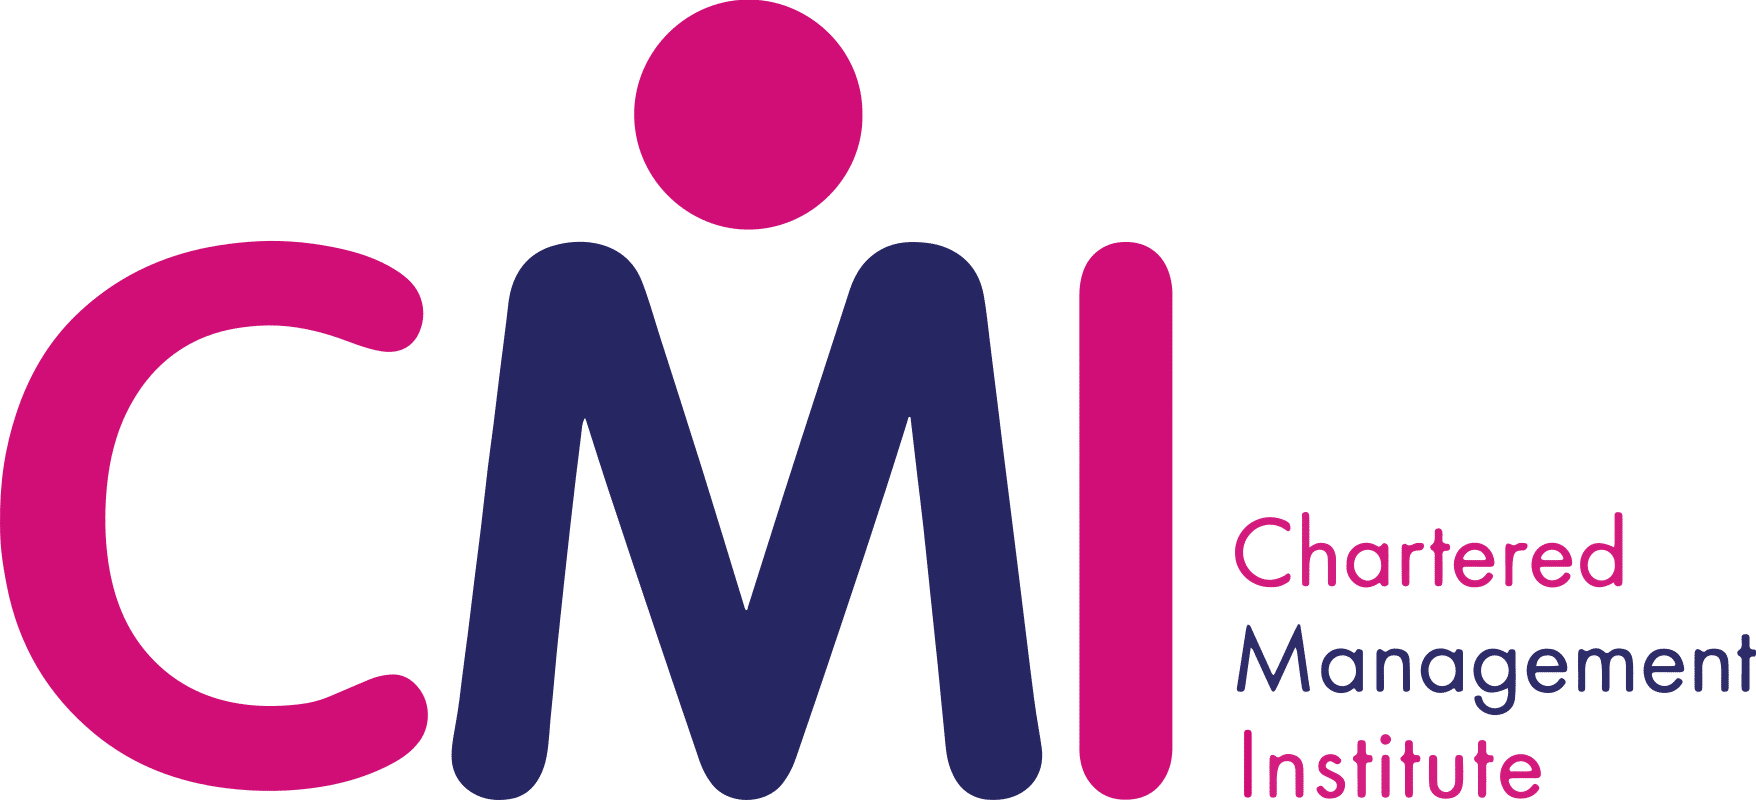 Chartered Management Institute (CMI) Logo